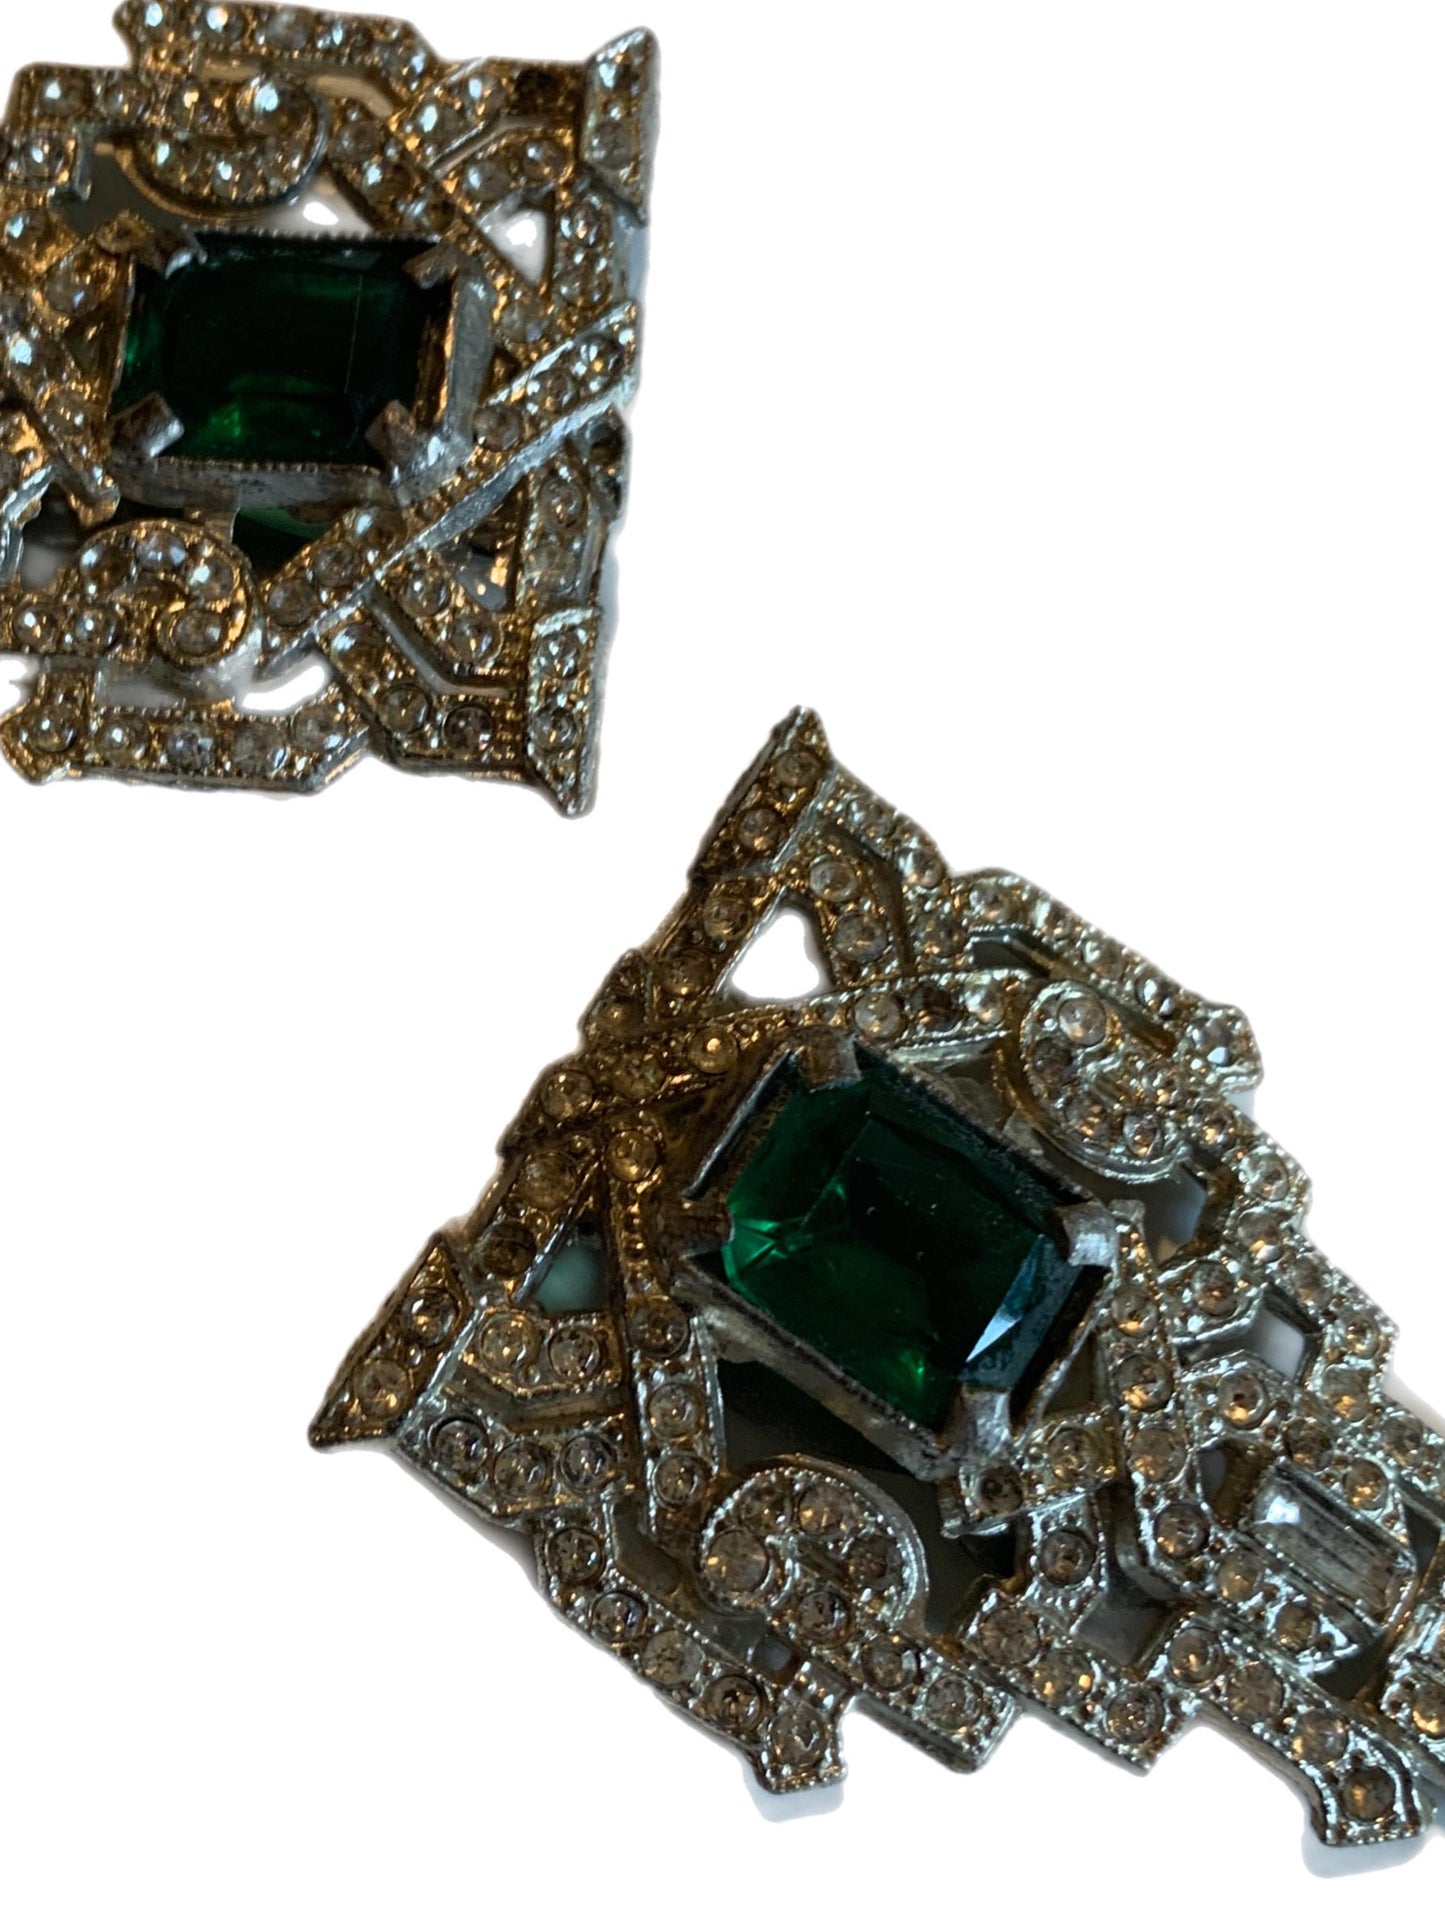 Emerald Green Glass and Rhinestones Set of Fur Clips circa 1930s